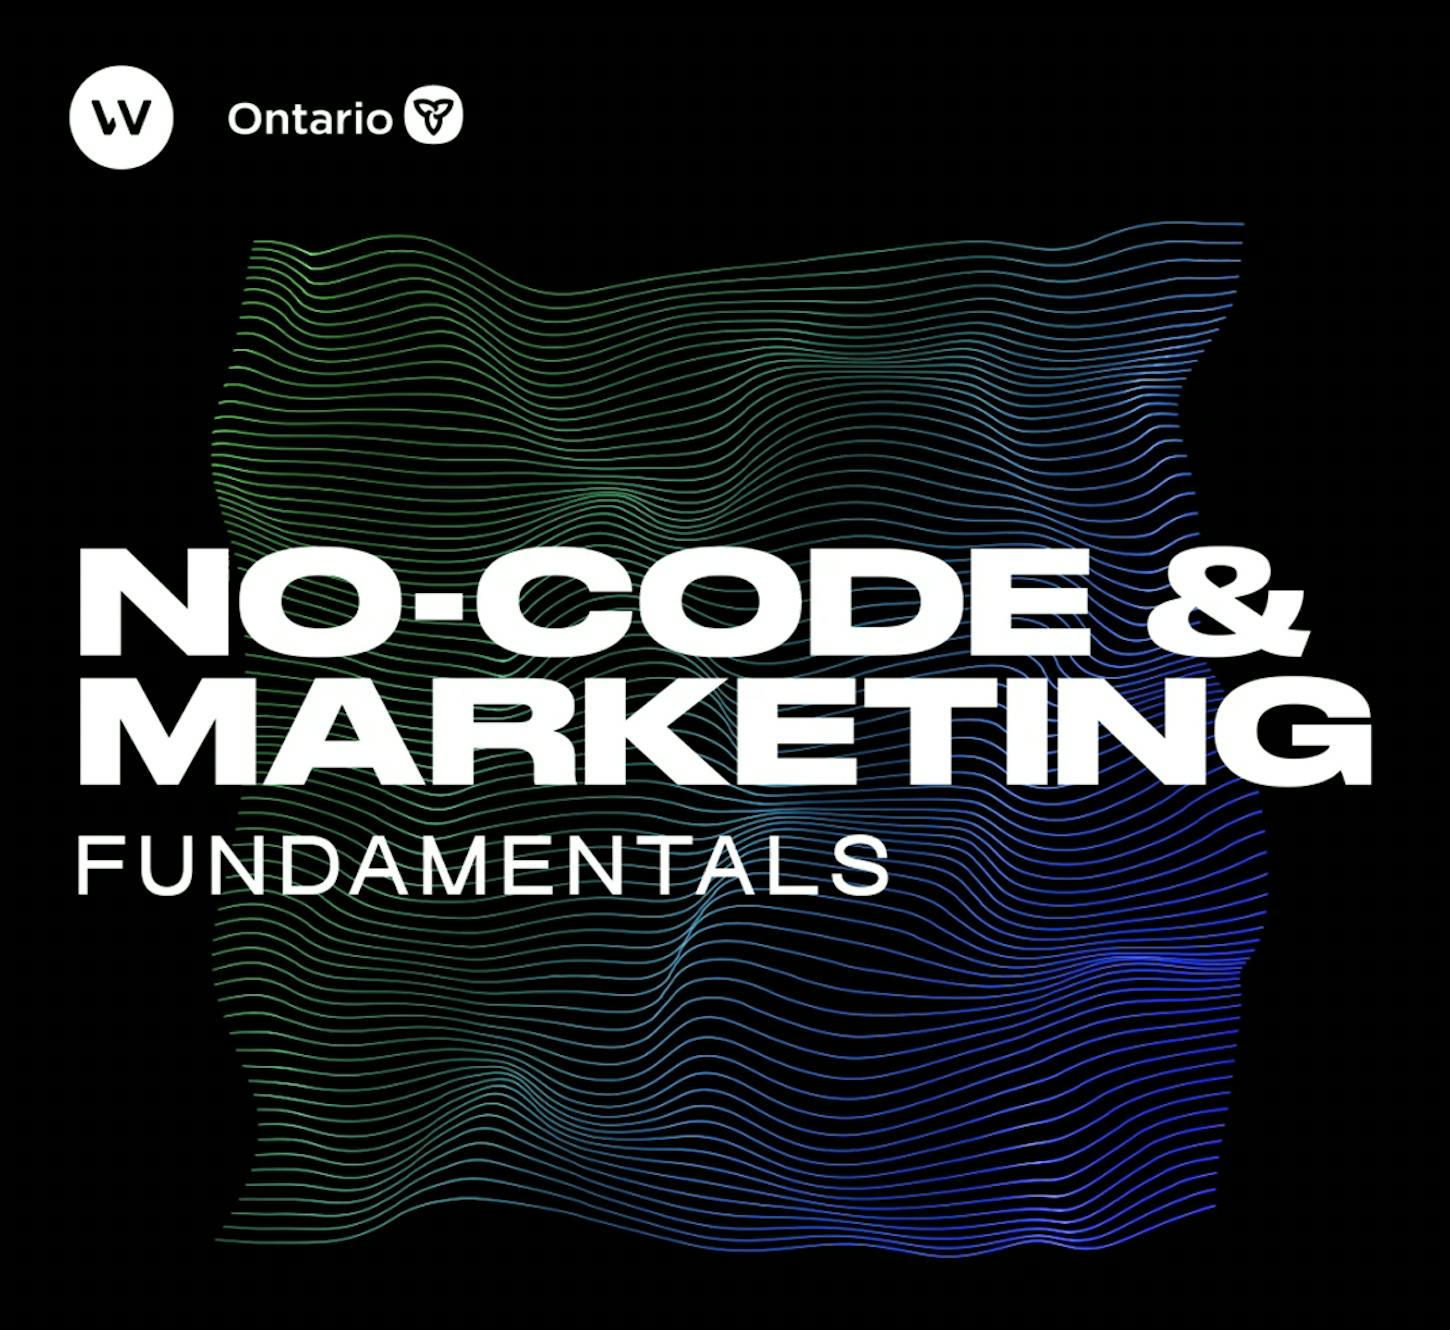 No-Code & Marketing Fundamentals